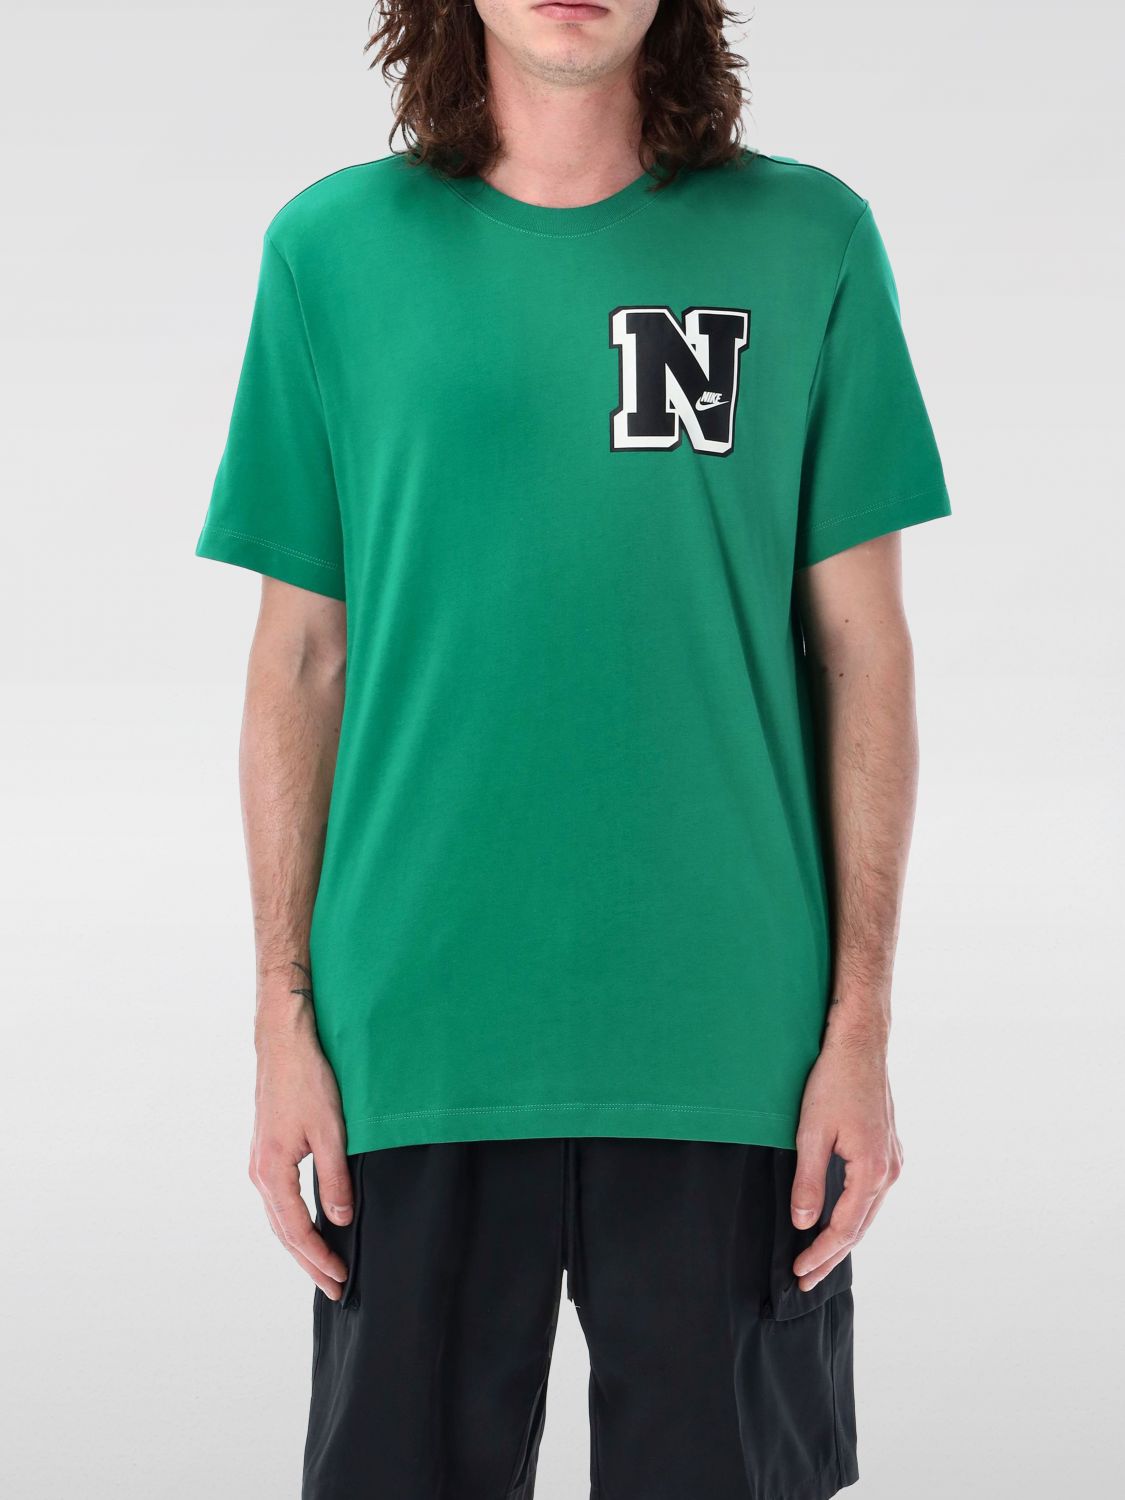 Nike T-shirt  Men Color Green